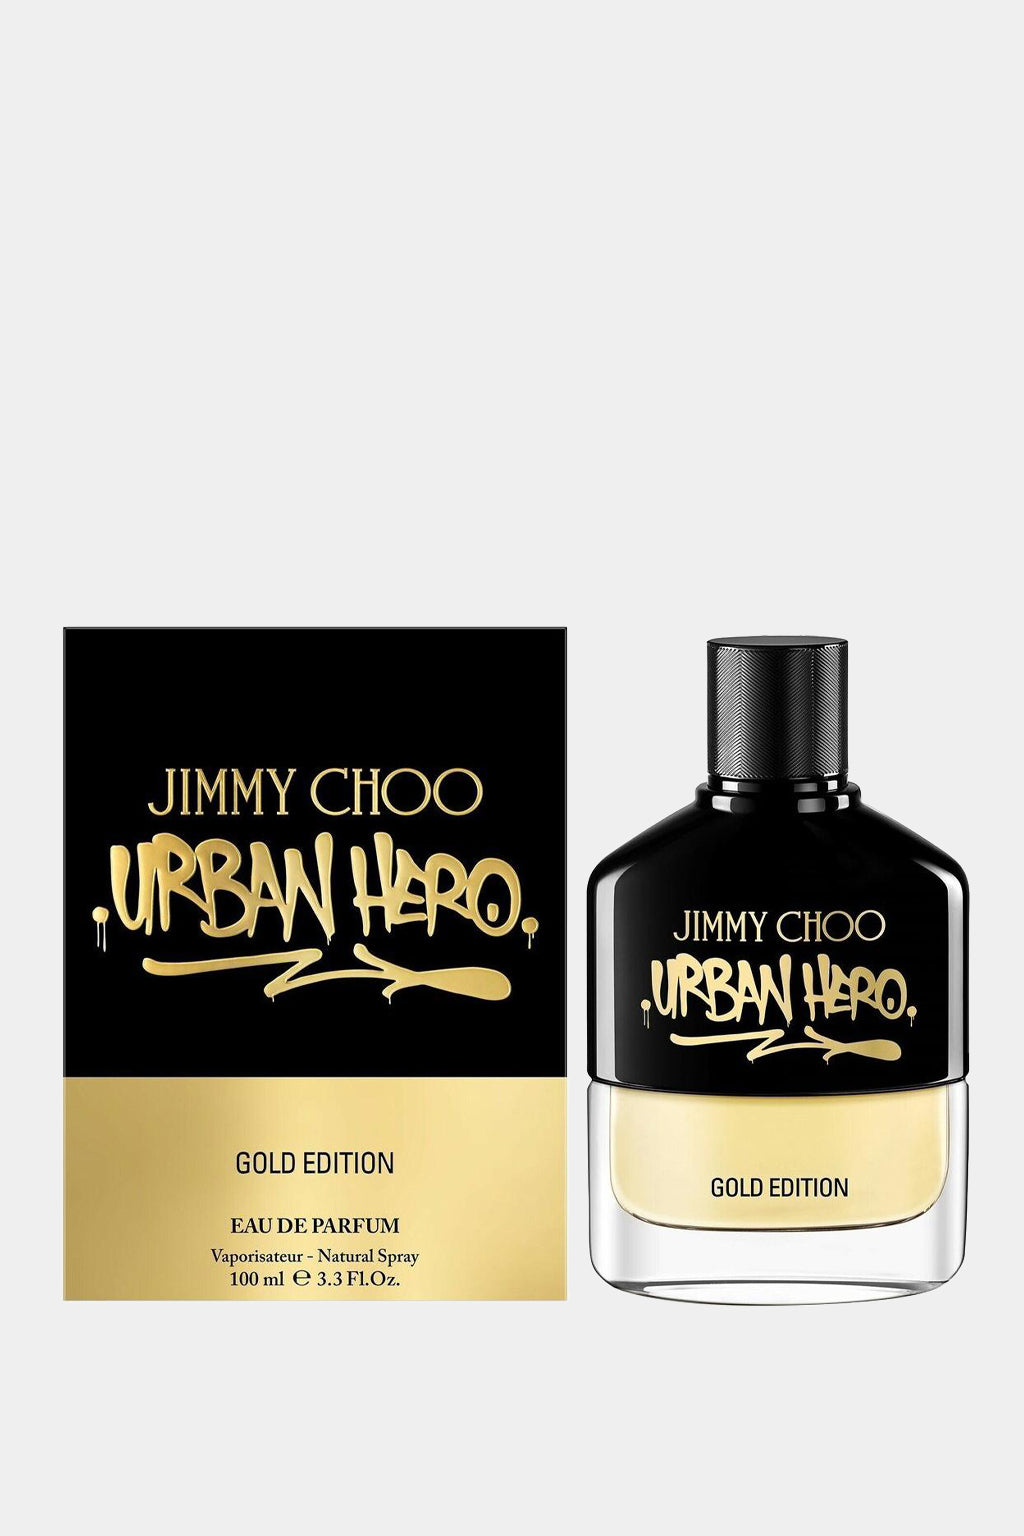 Jimmy Choo - Urban Hero Gold Edition Eau de Parfum